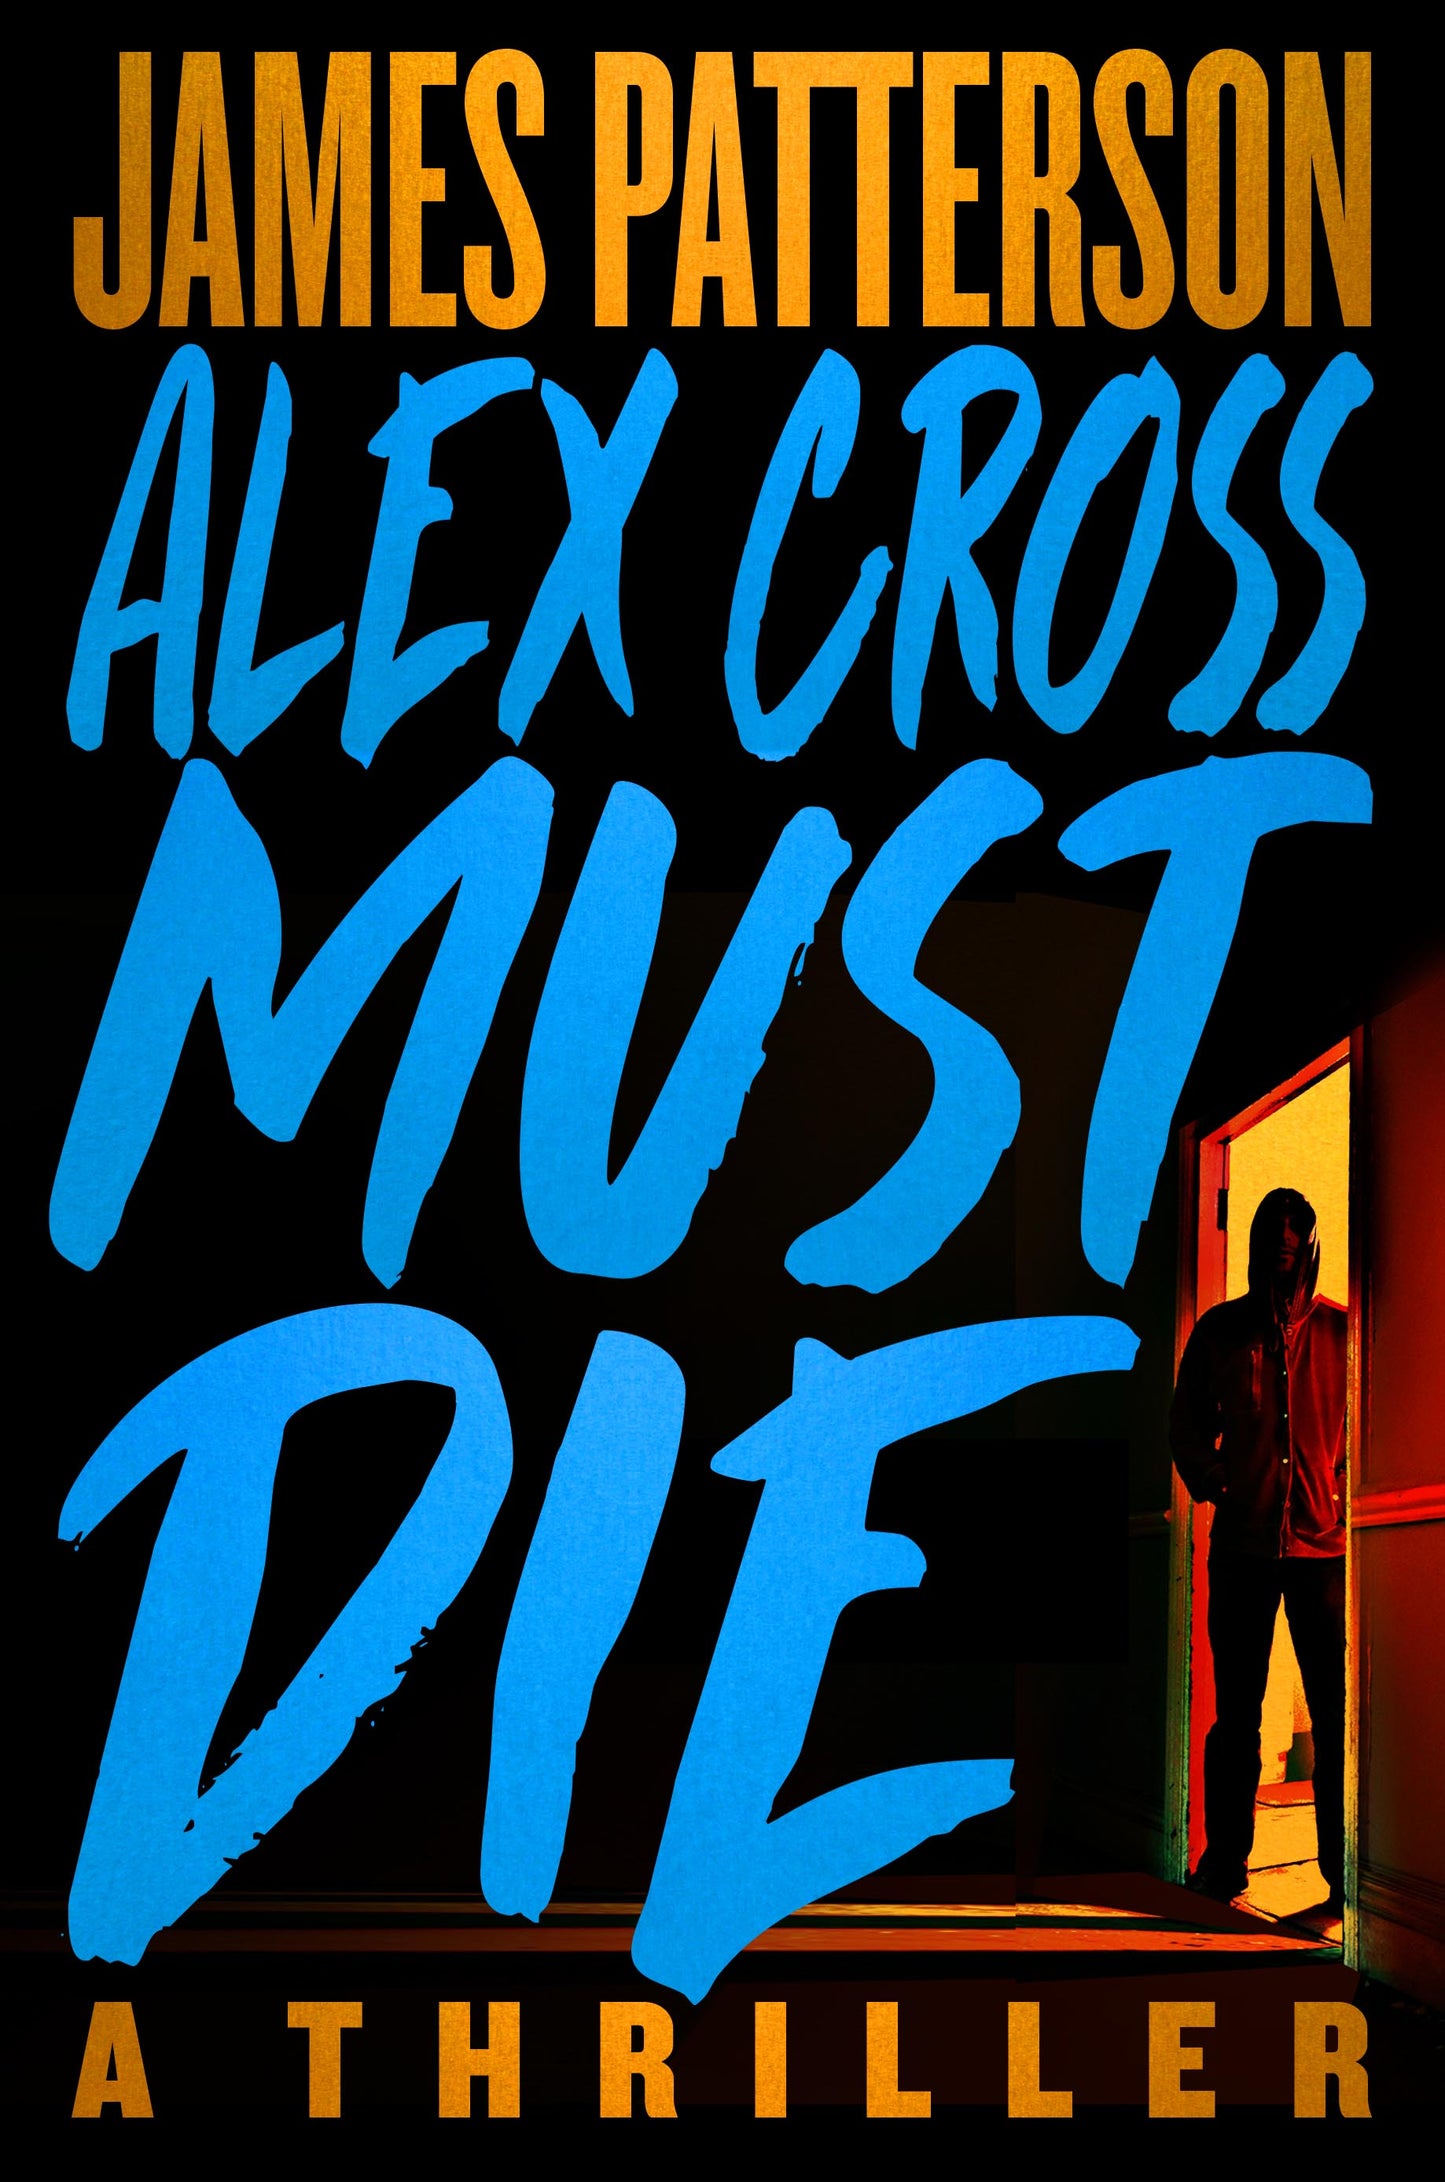 Alex Cross Must Die (Alex Cross #32) by James Patterson